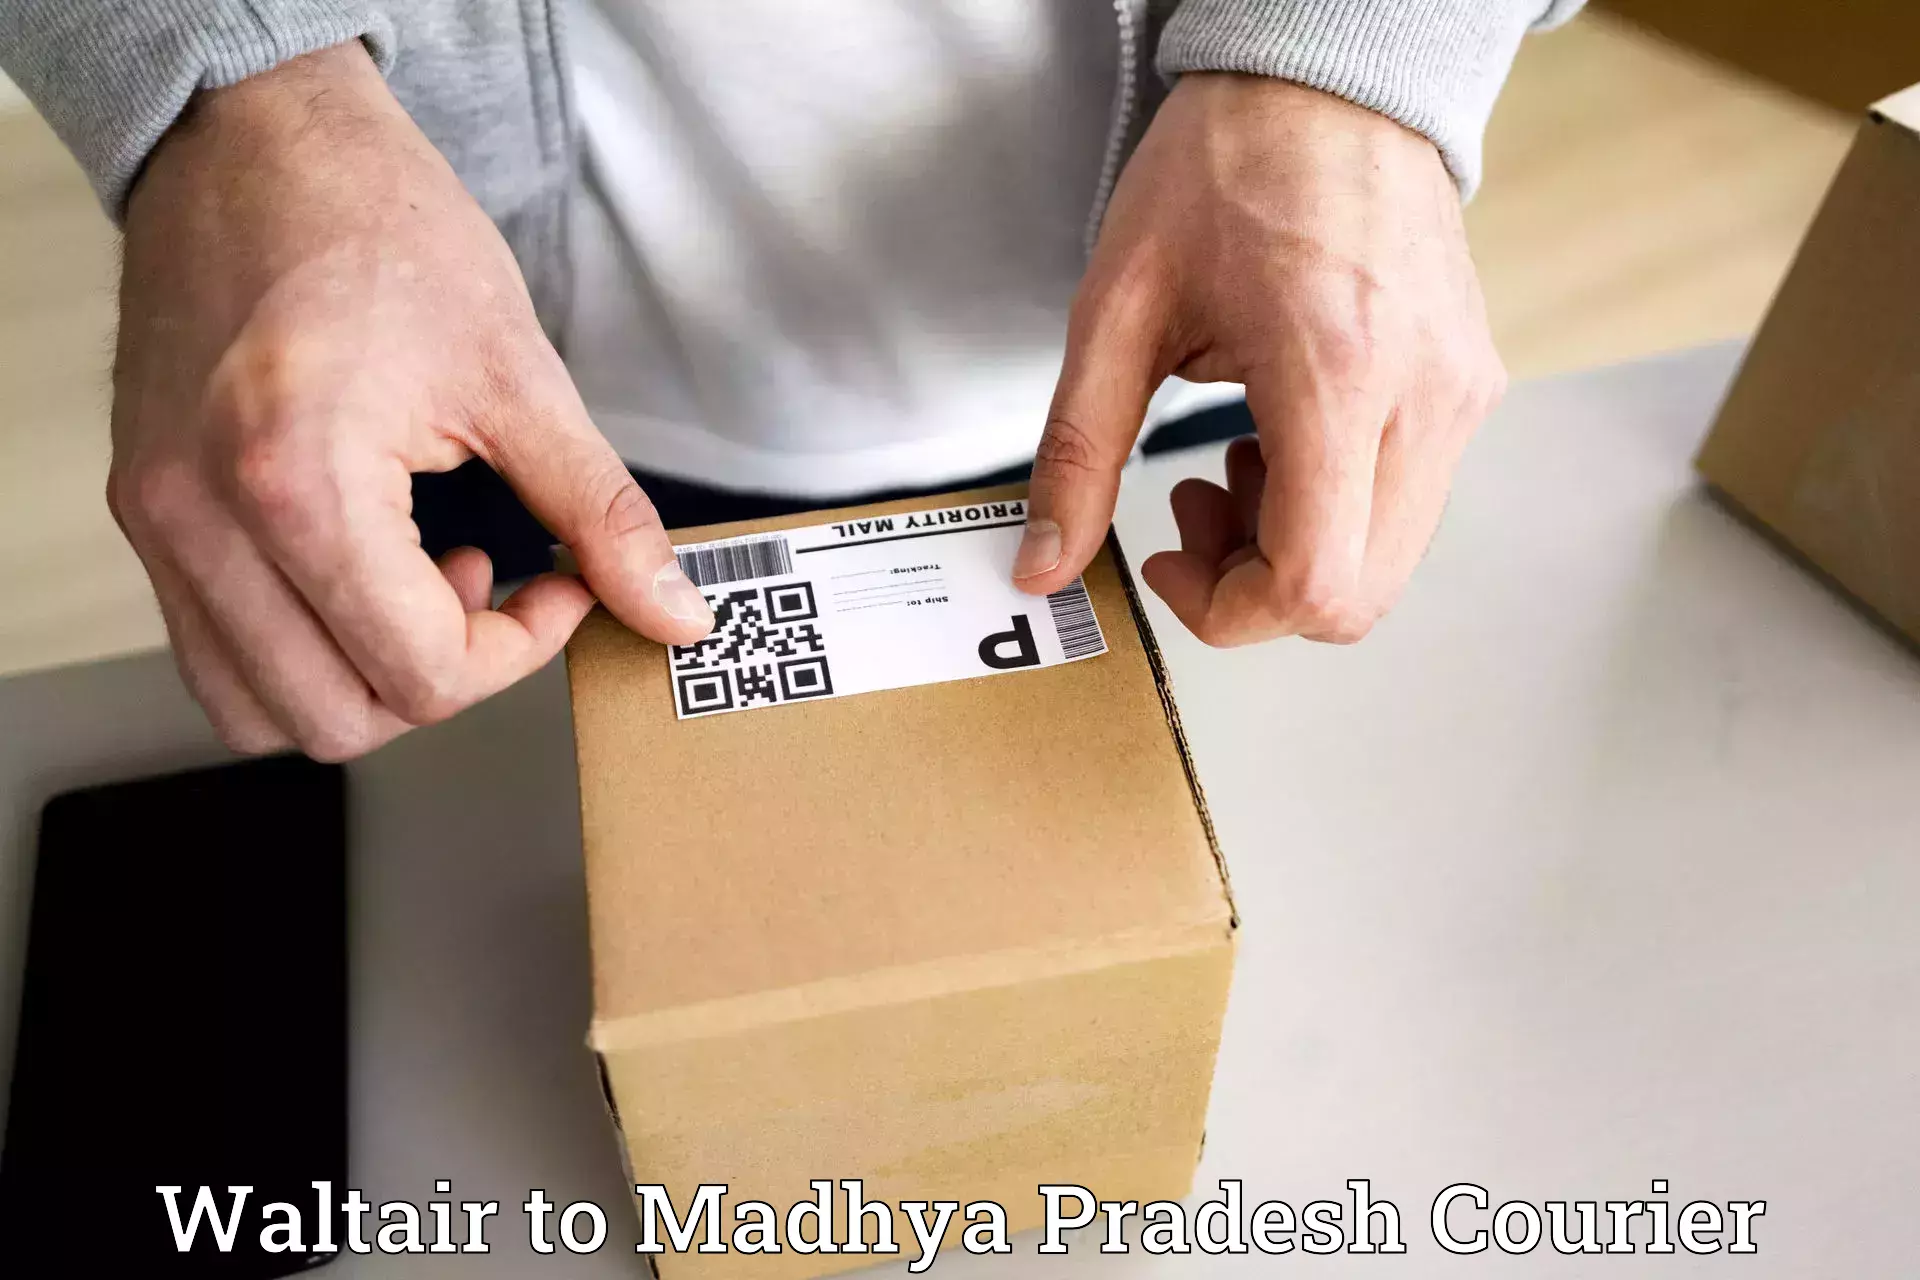 Package delivery network Waltair to Mandsaur